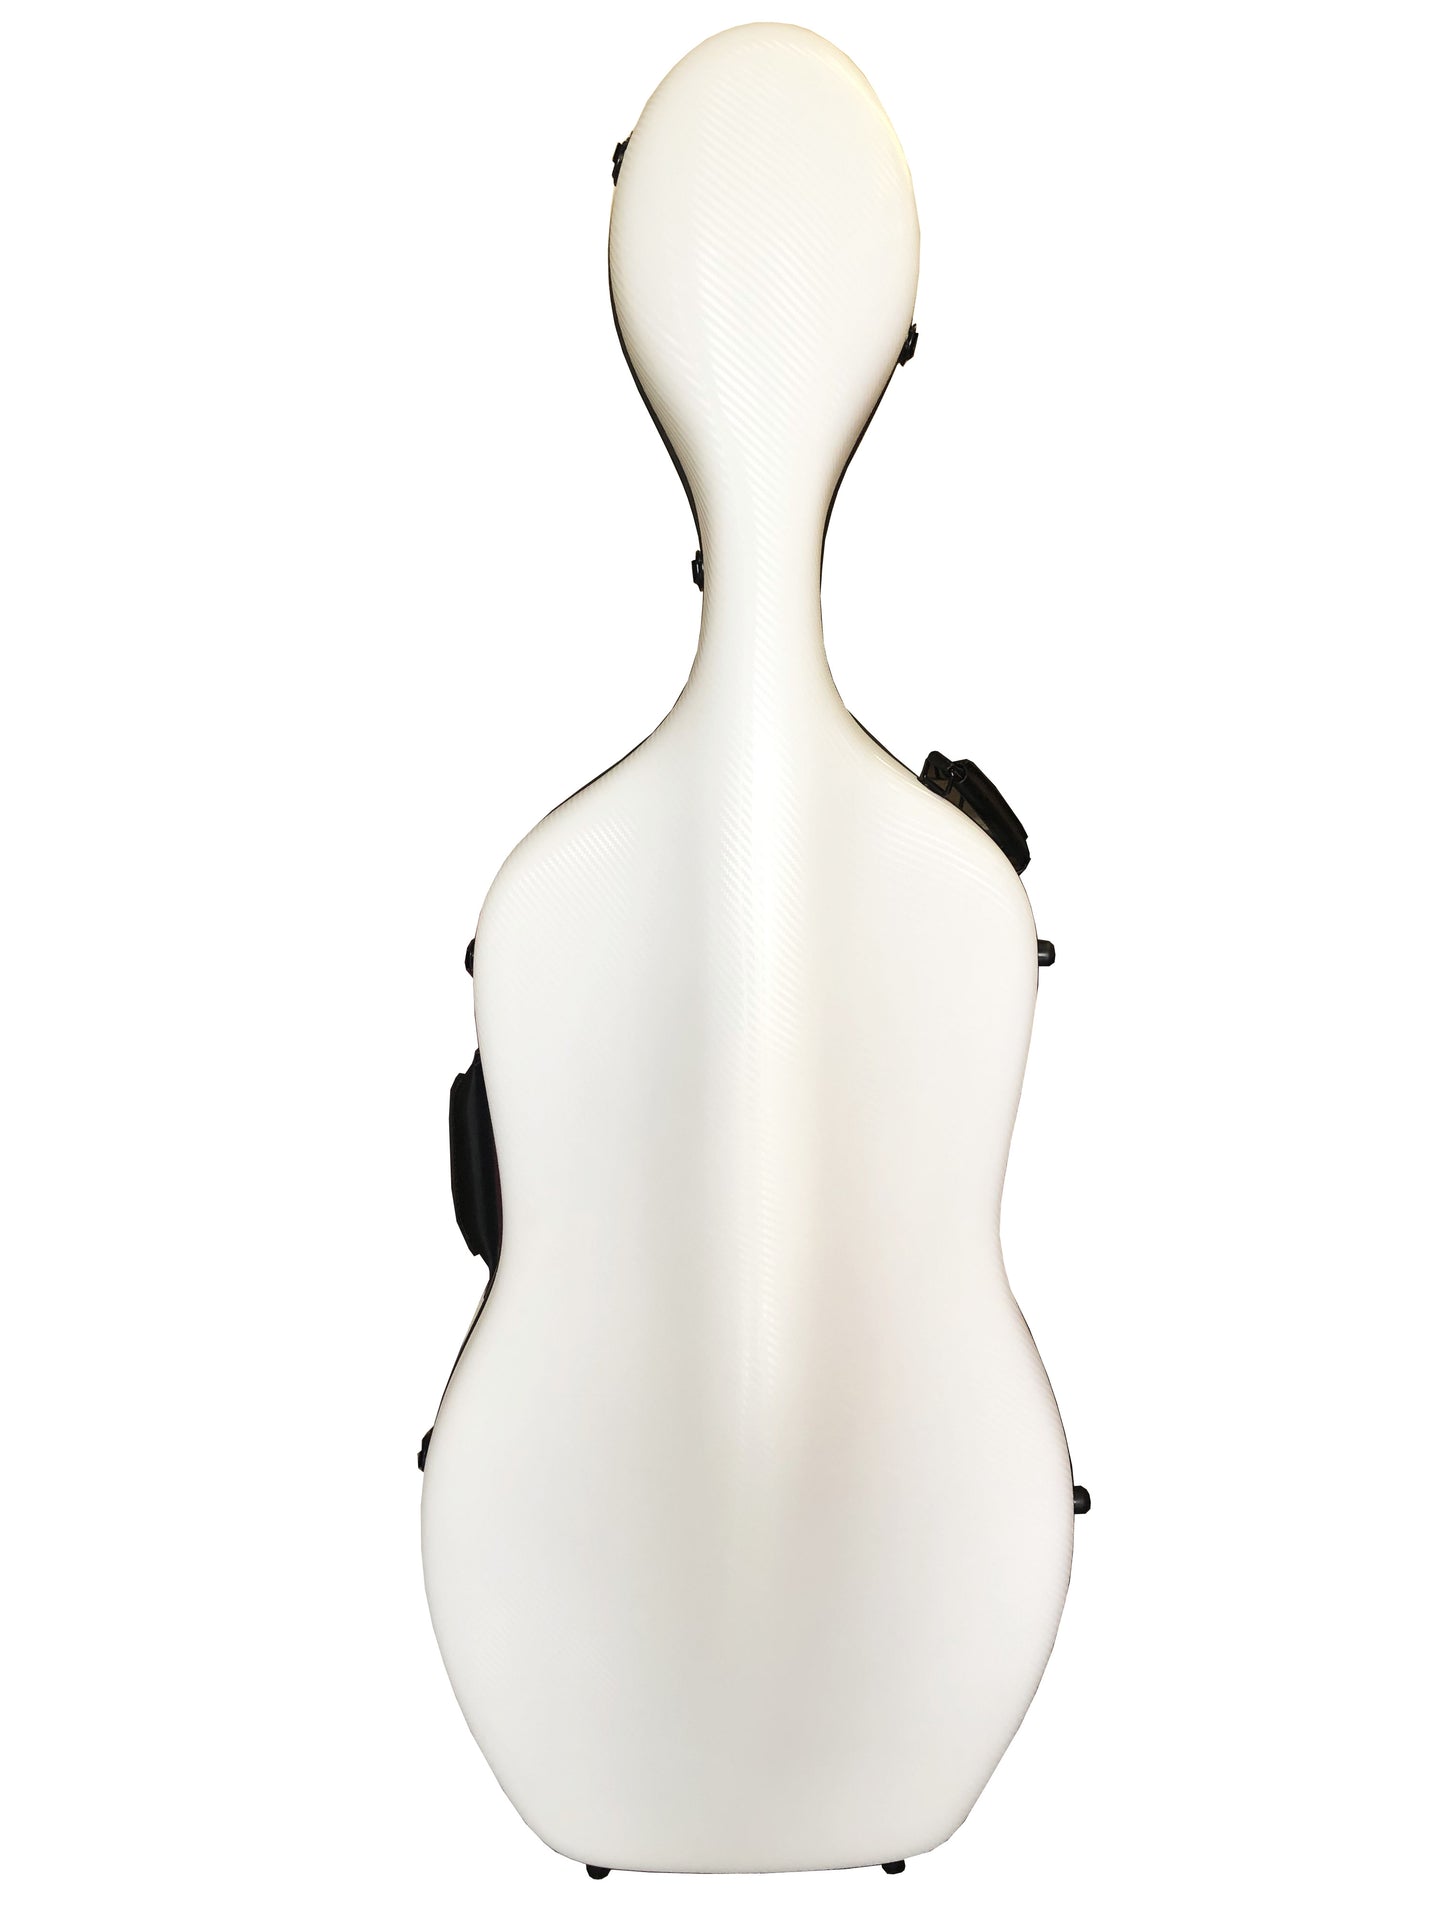 Cello case "Antonio" composite very robust 4 kg in 2 colors